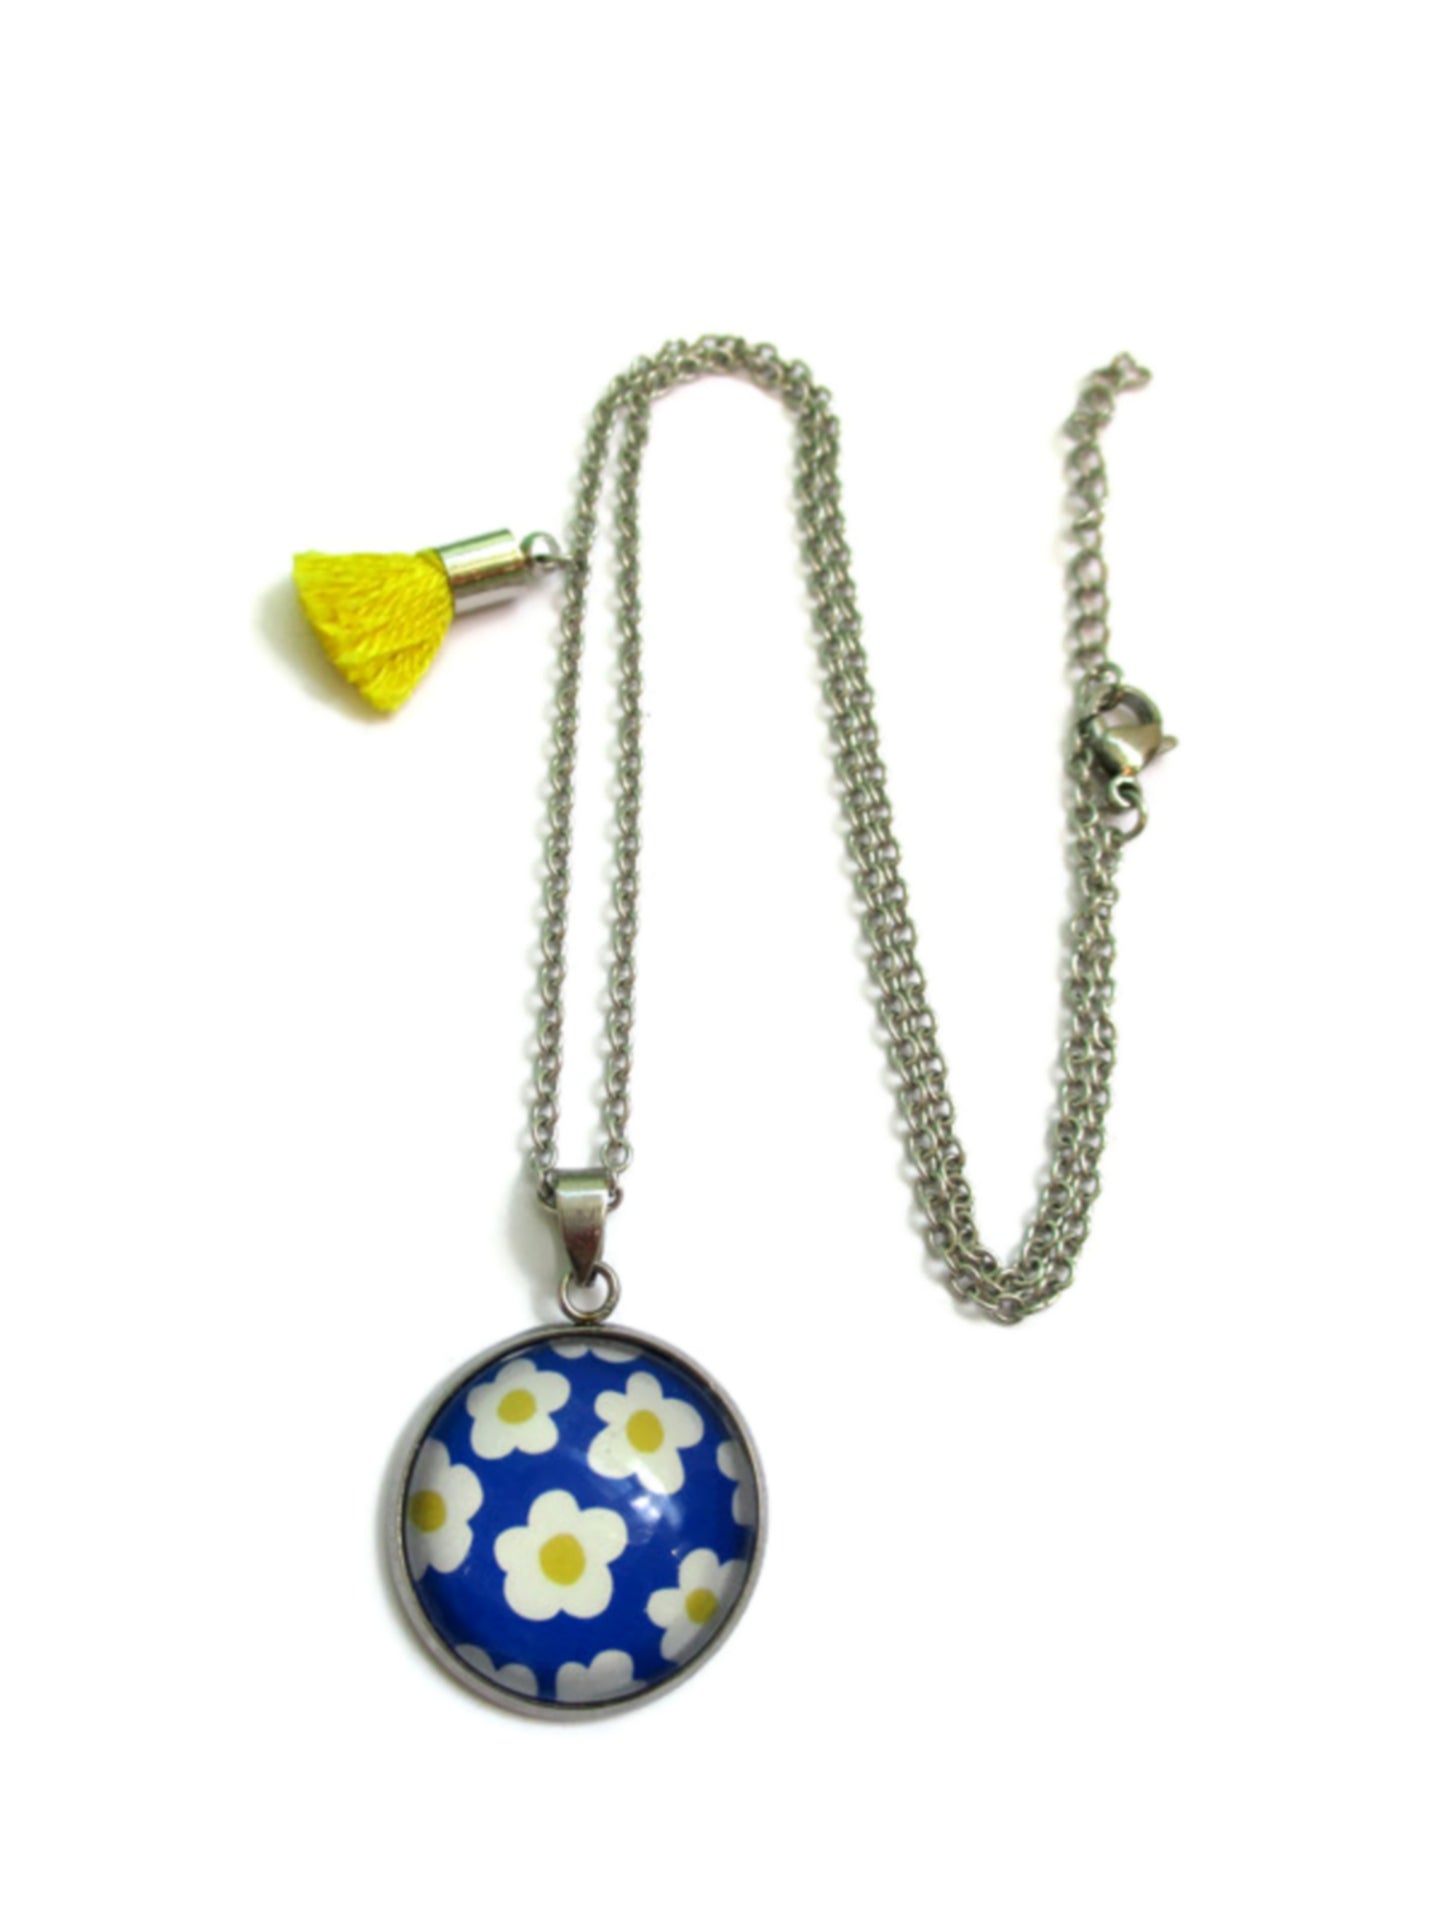 Little blue Flower necklace